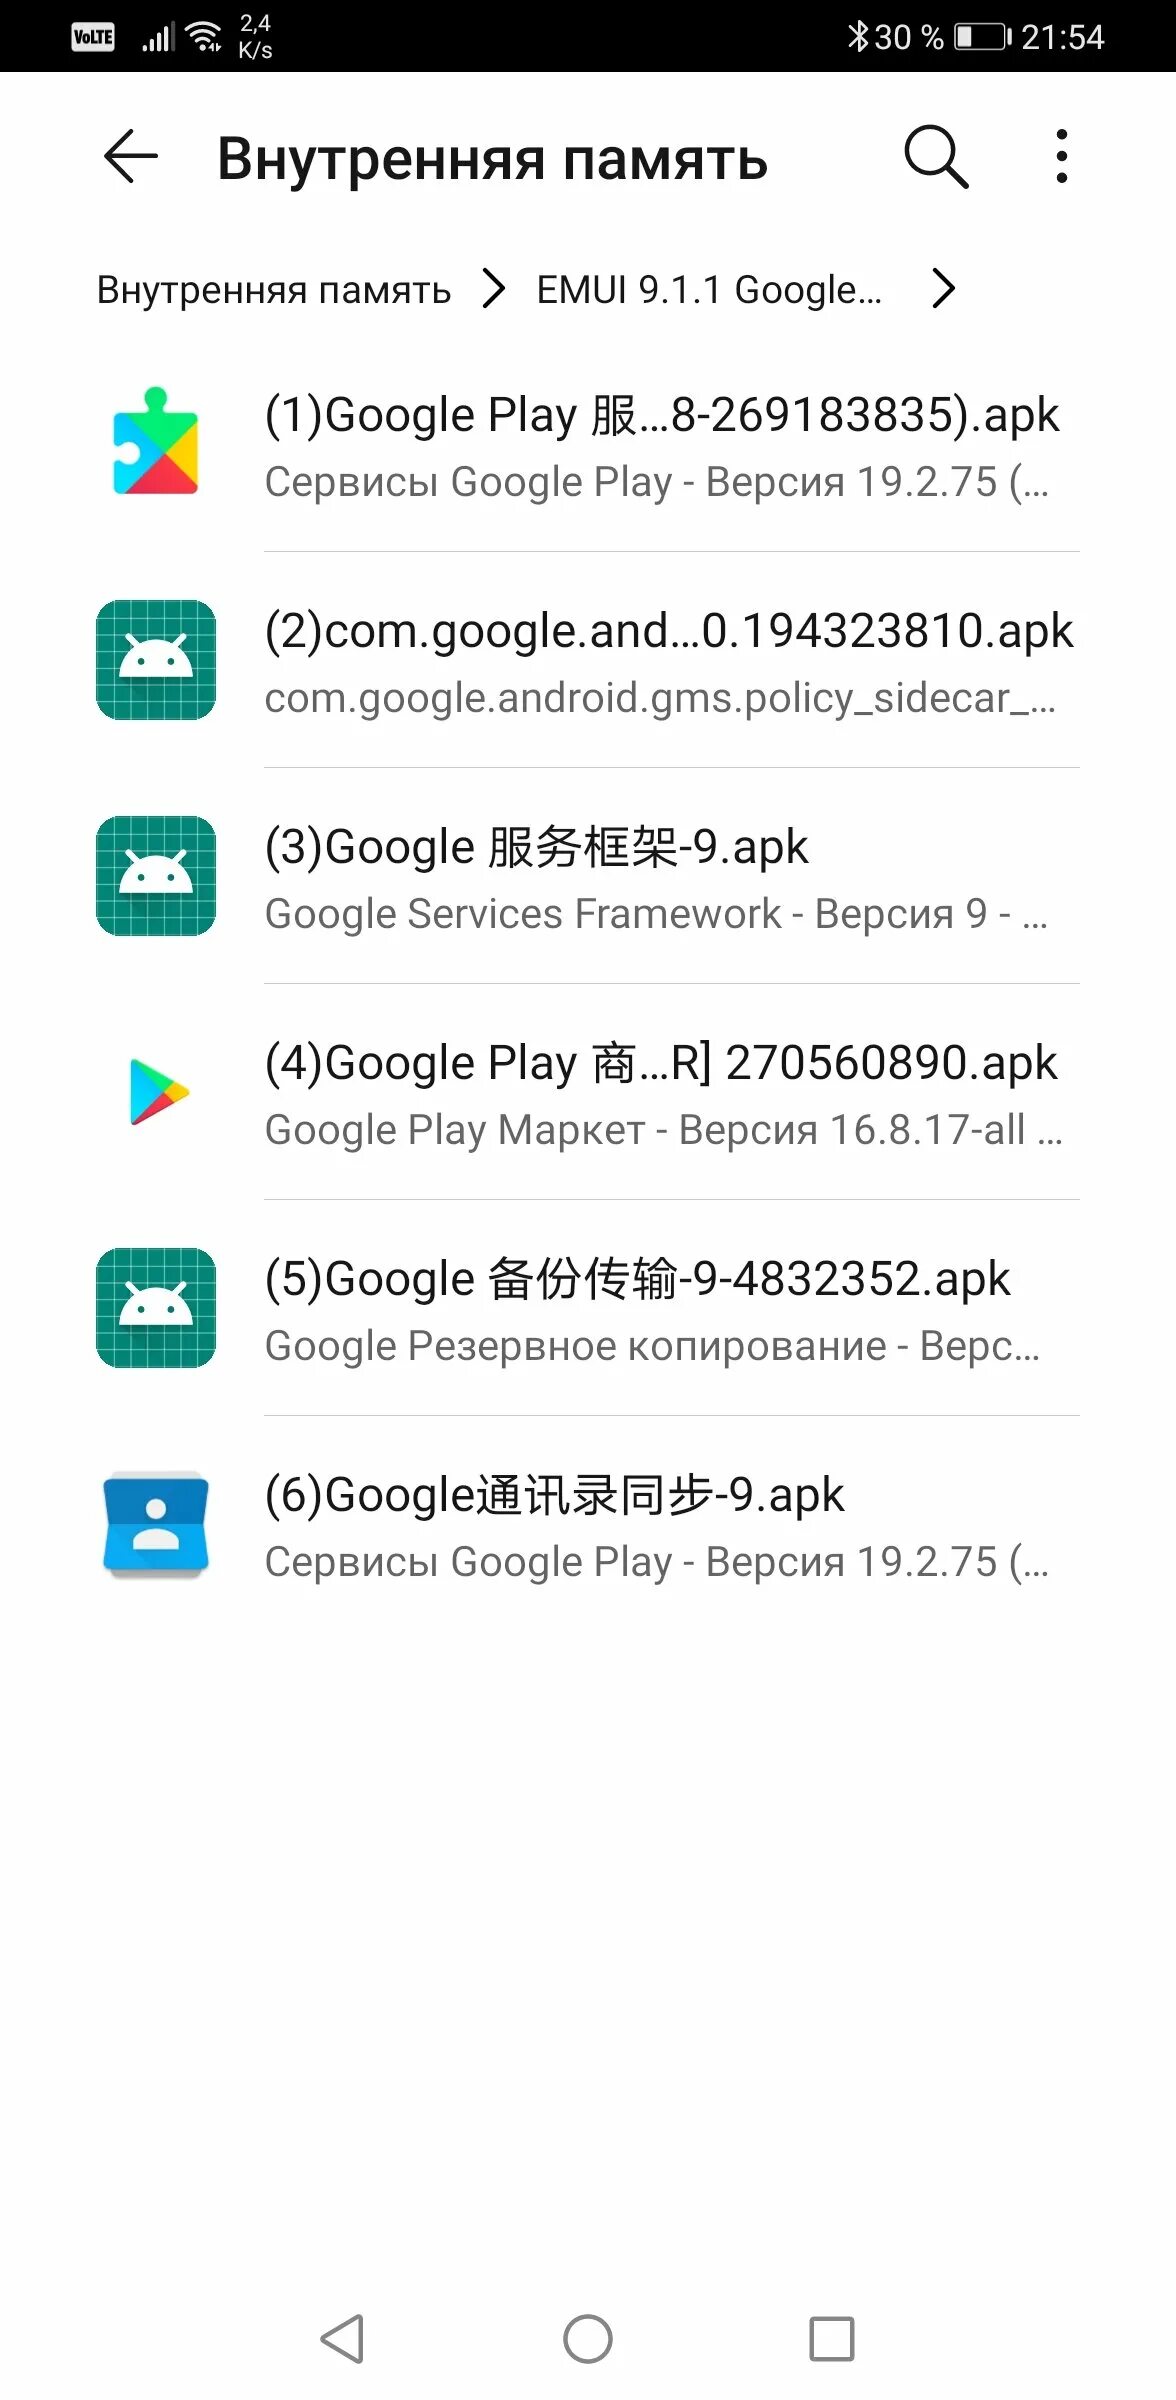 Сервисы Google Play. Гугл сервисы на Huawei. Установление сервисов гугл на Хуавей. Как на Хуавей установить Google Play. Как установить гугл на хуавей 2023